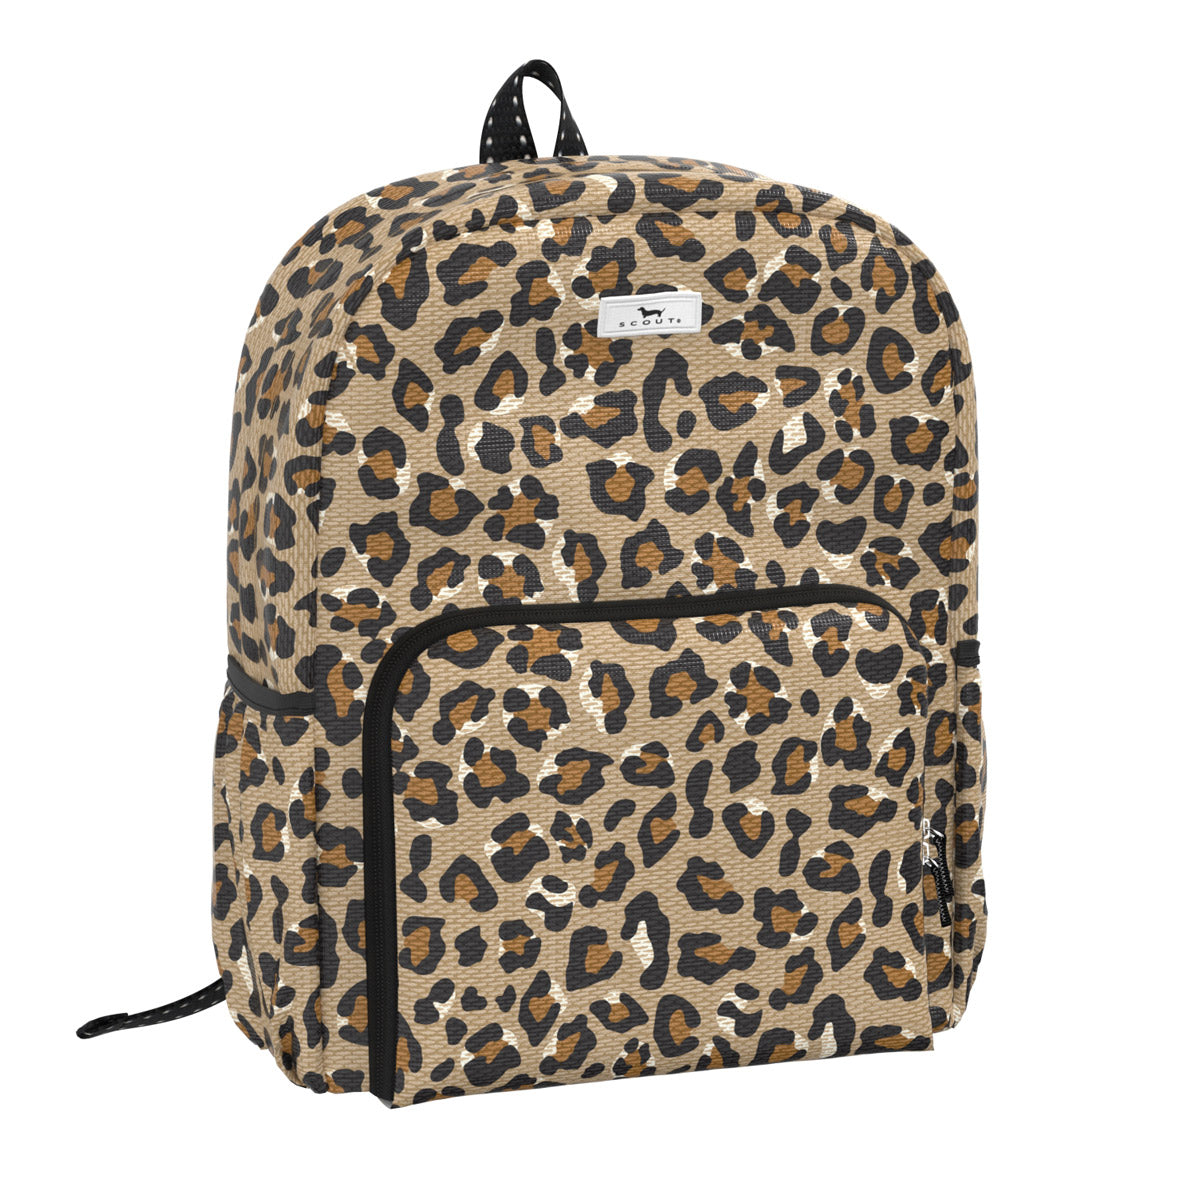 Travel Buddy Foldable Backpack